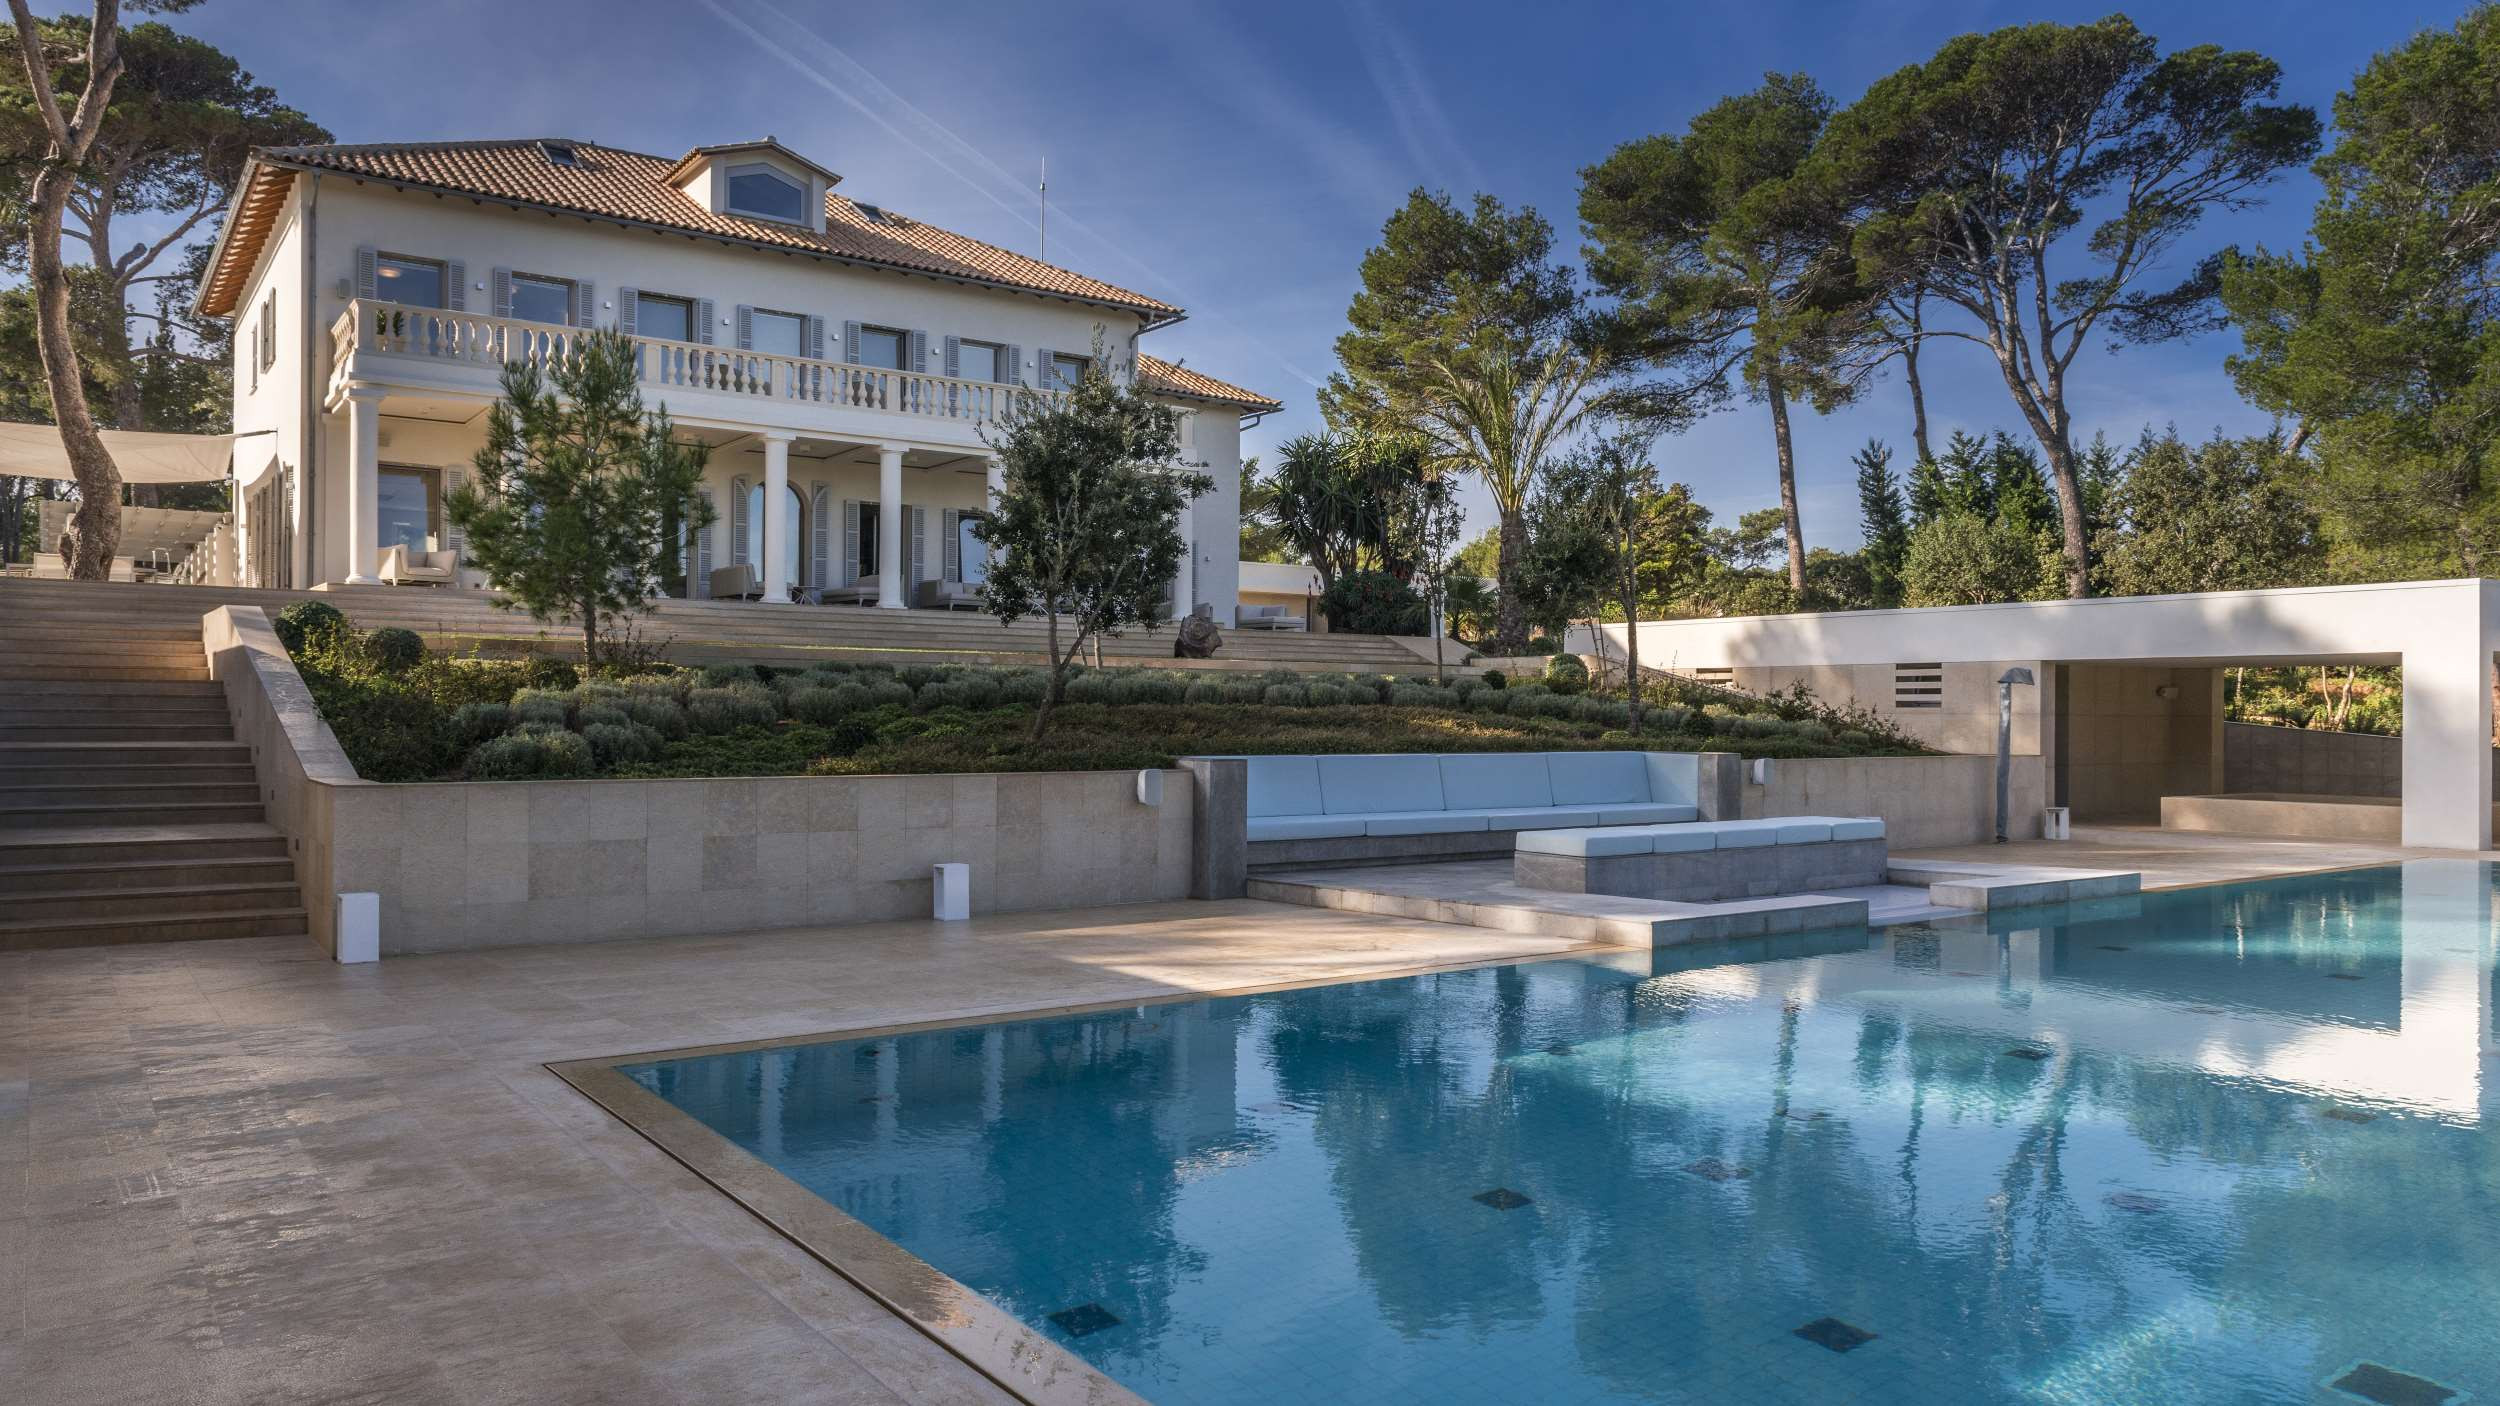 Villa Leones is a luxury villa situated in Mal Pas, Alcudia